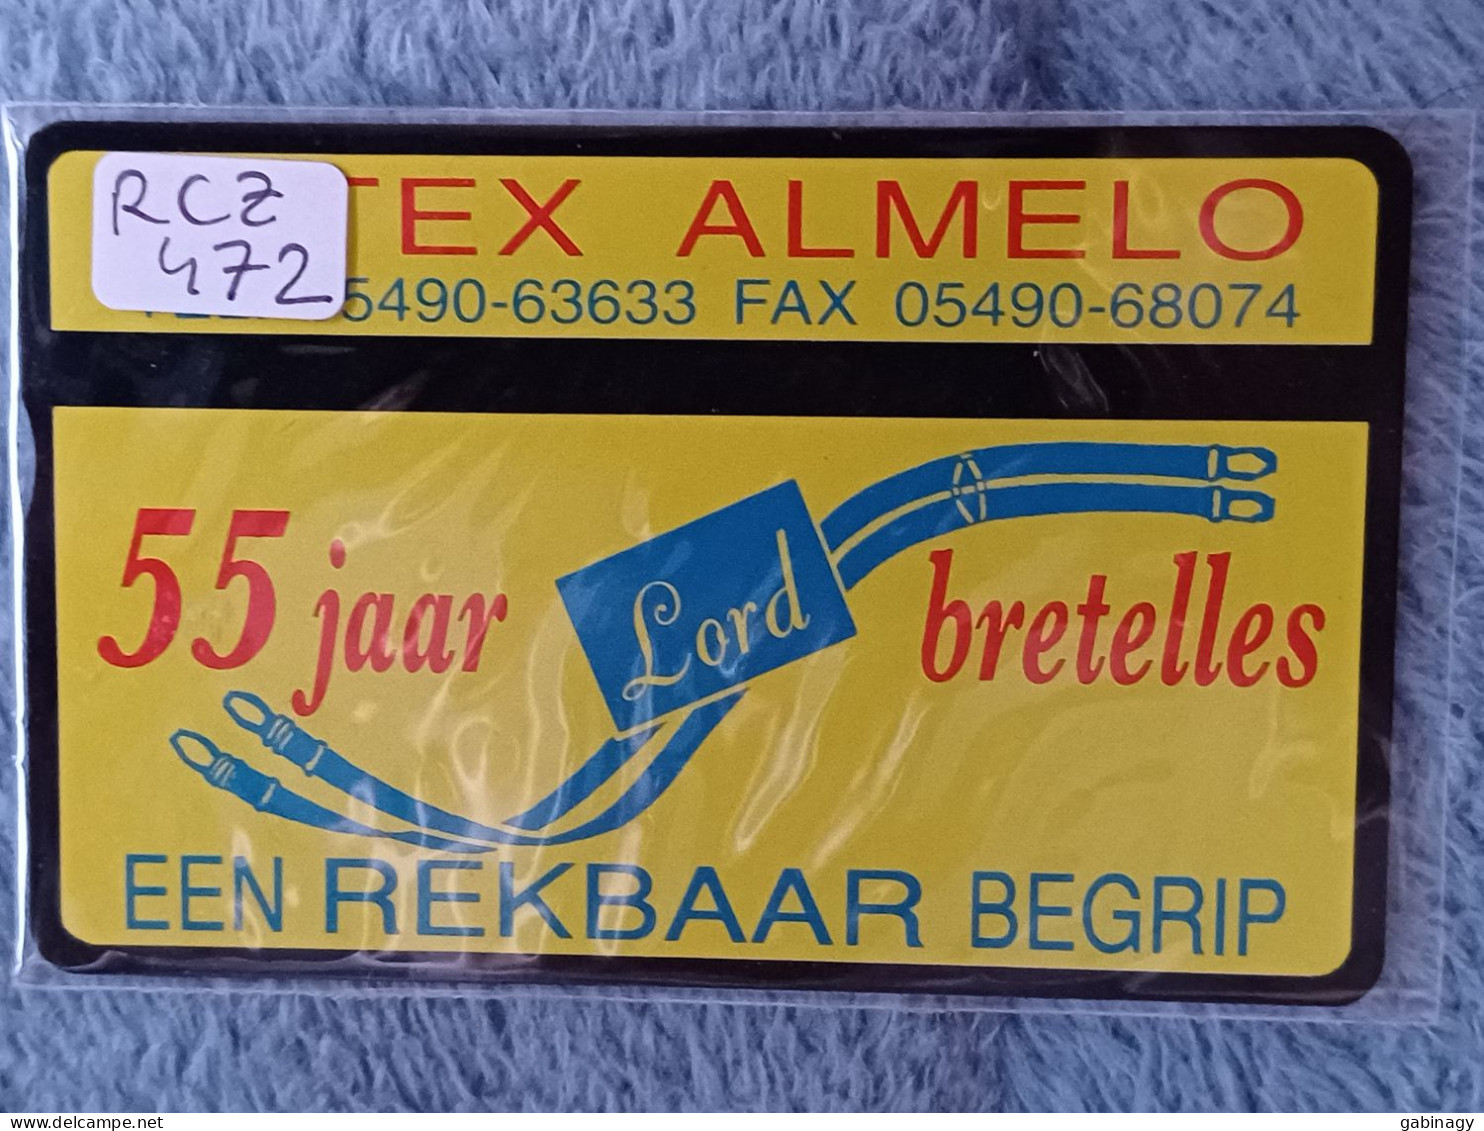 NETHERLANDS - RCZ472 - Eltex Almelo 55 Jaar Lord Bretelles - 1.030EX. - Privat